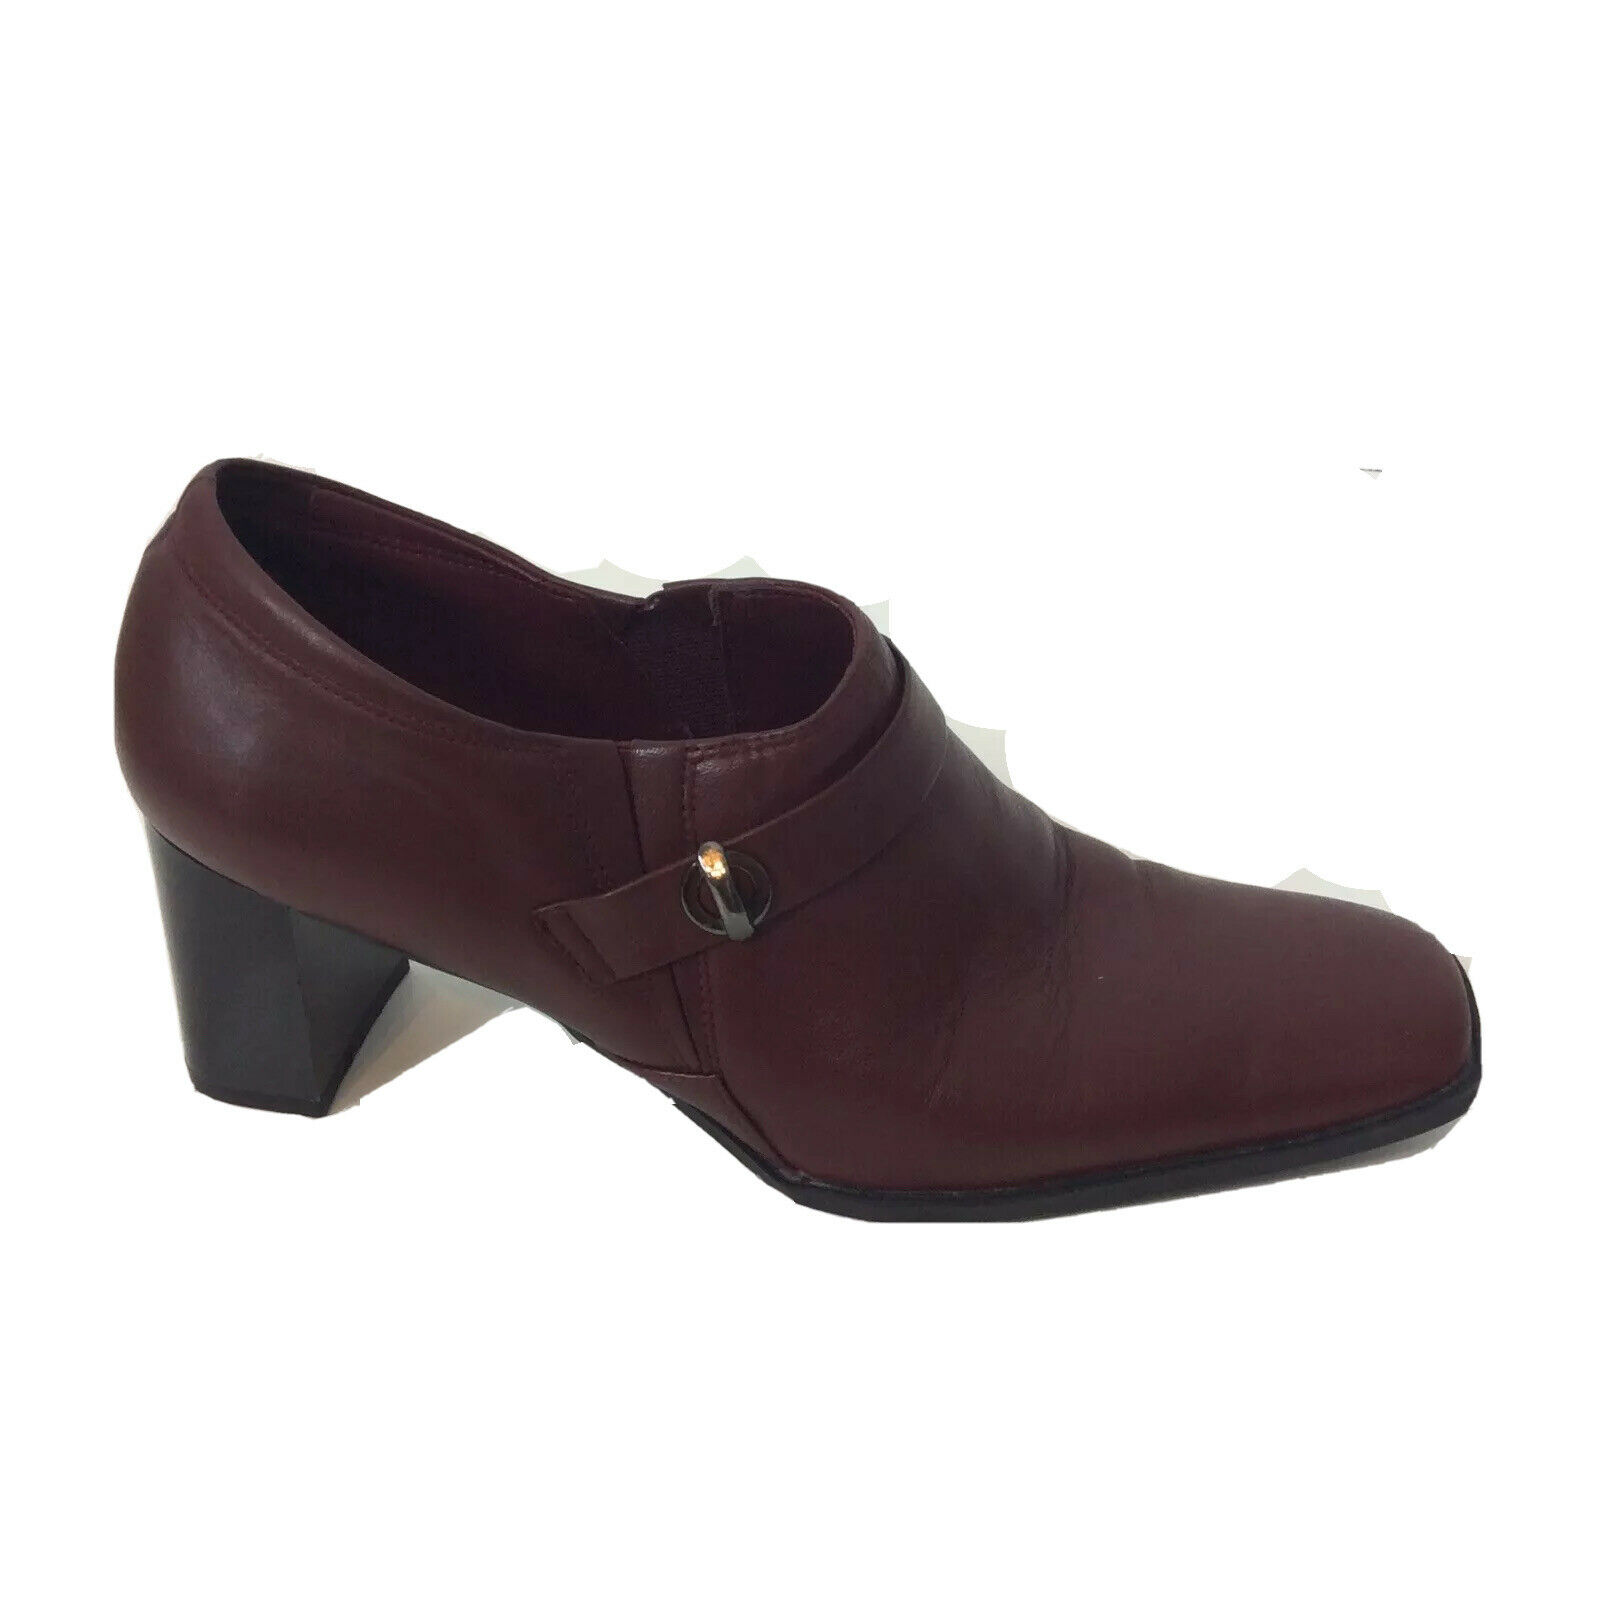 Aerosoles Aerology Womens 9 1/2M Maroon Red Saylor Leather Shoes Heels